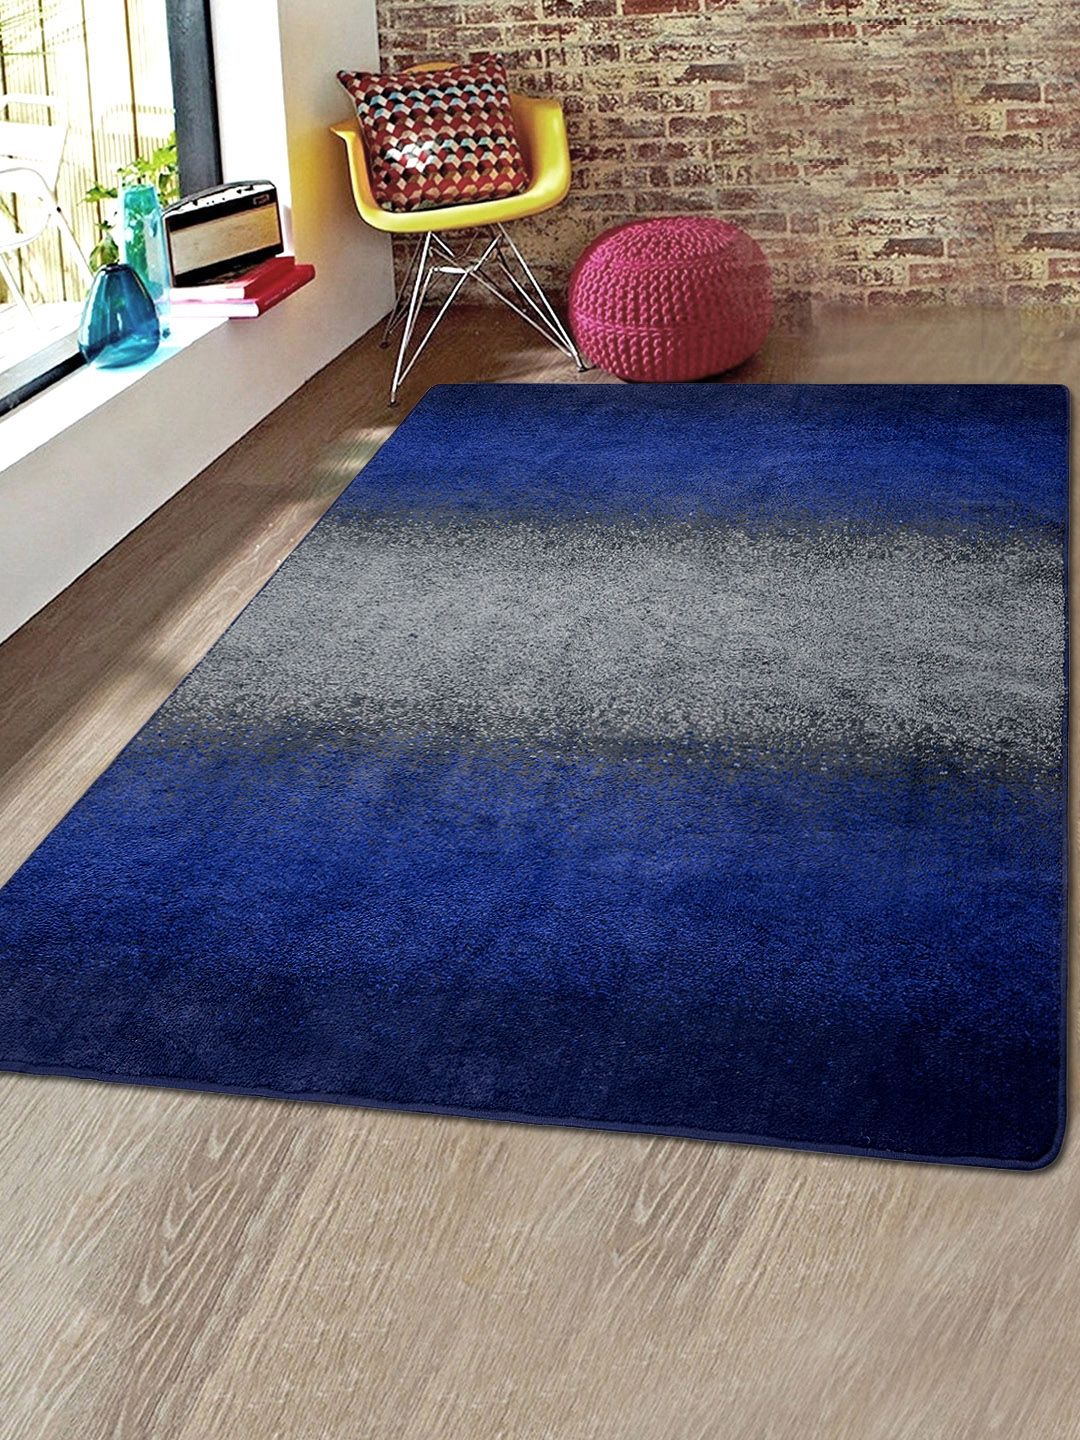 Saral Home Blue & Grey Colourblocked Microfiber Anti-Skid Carpet Price in India